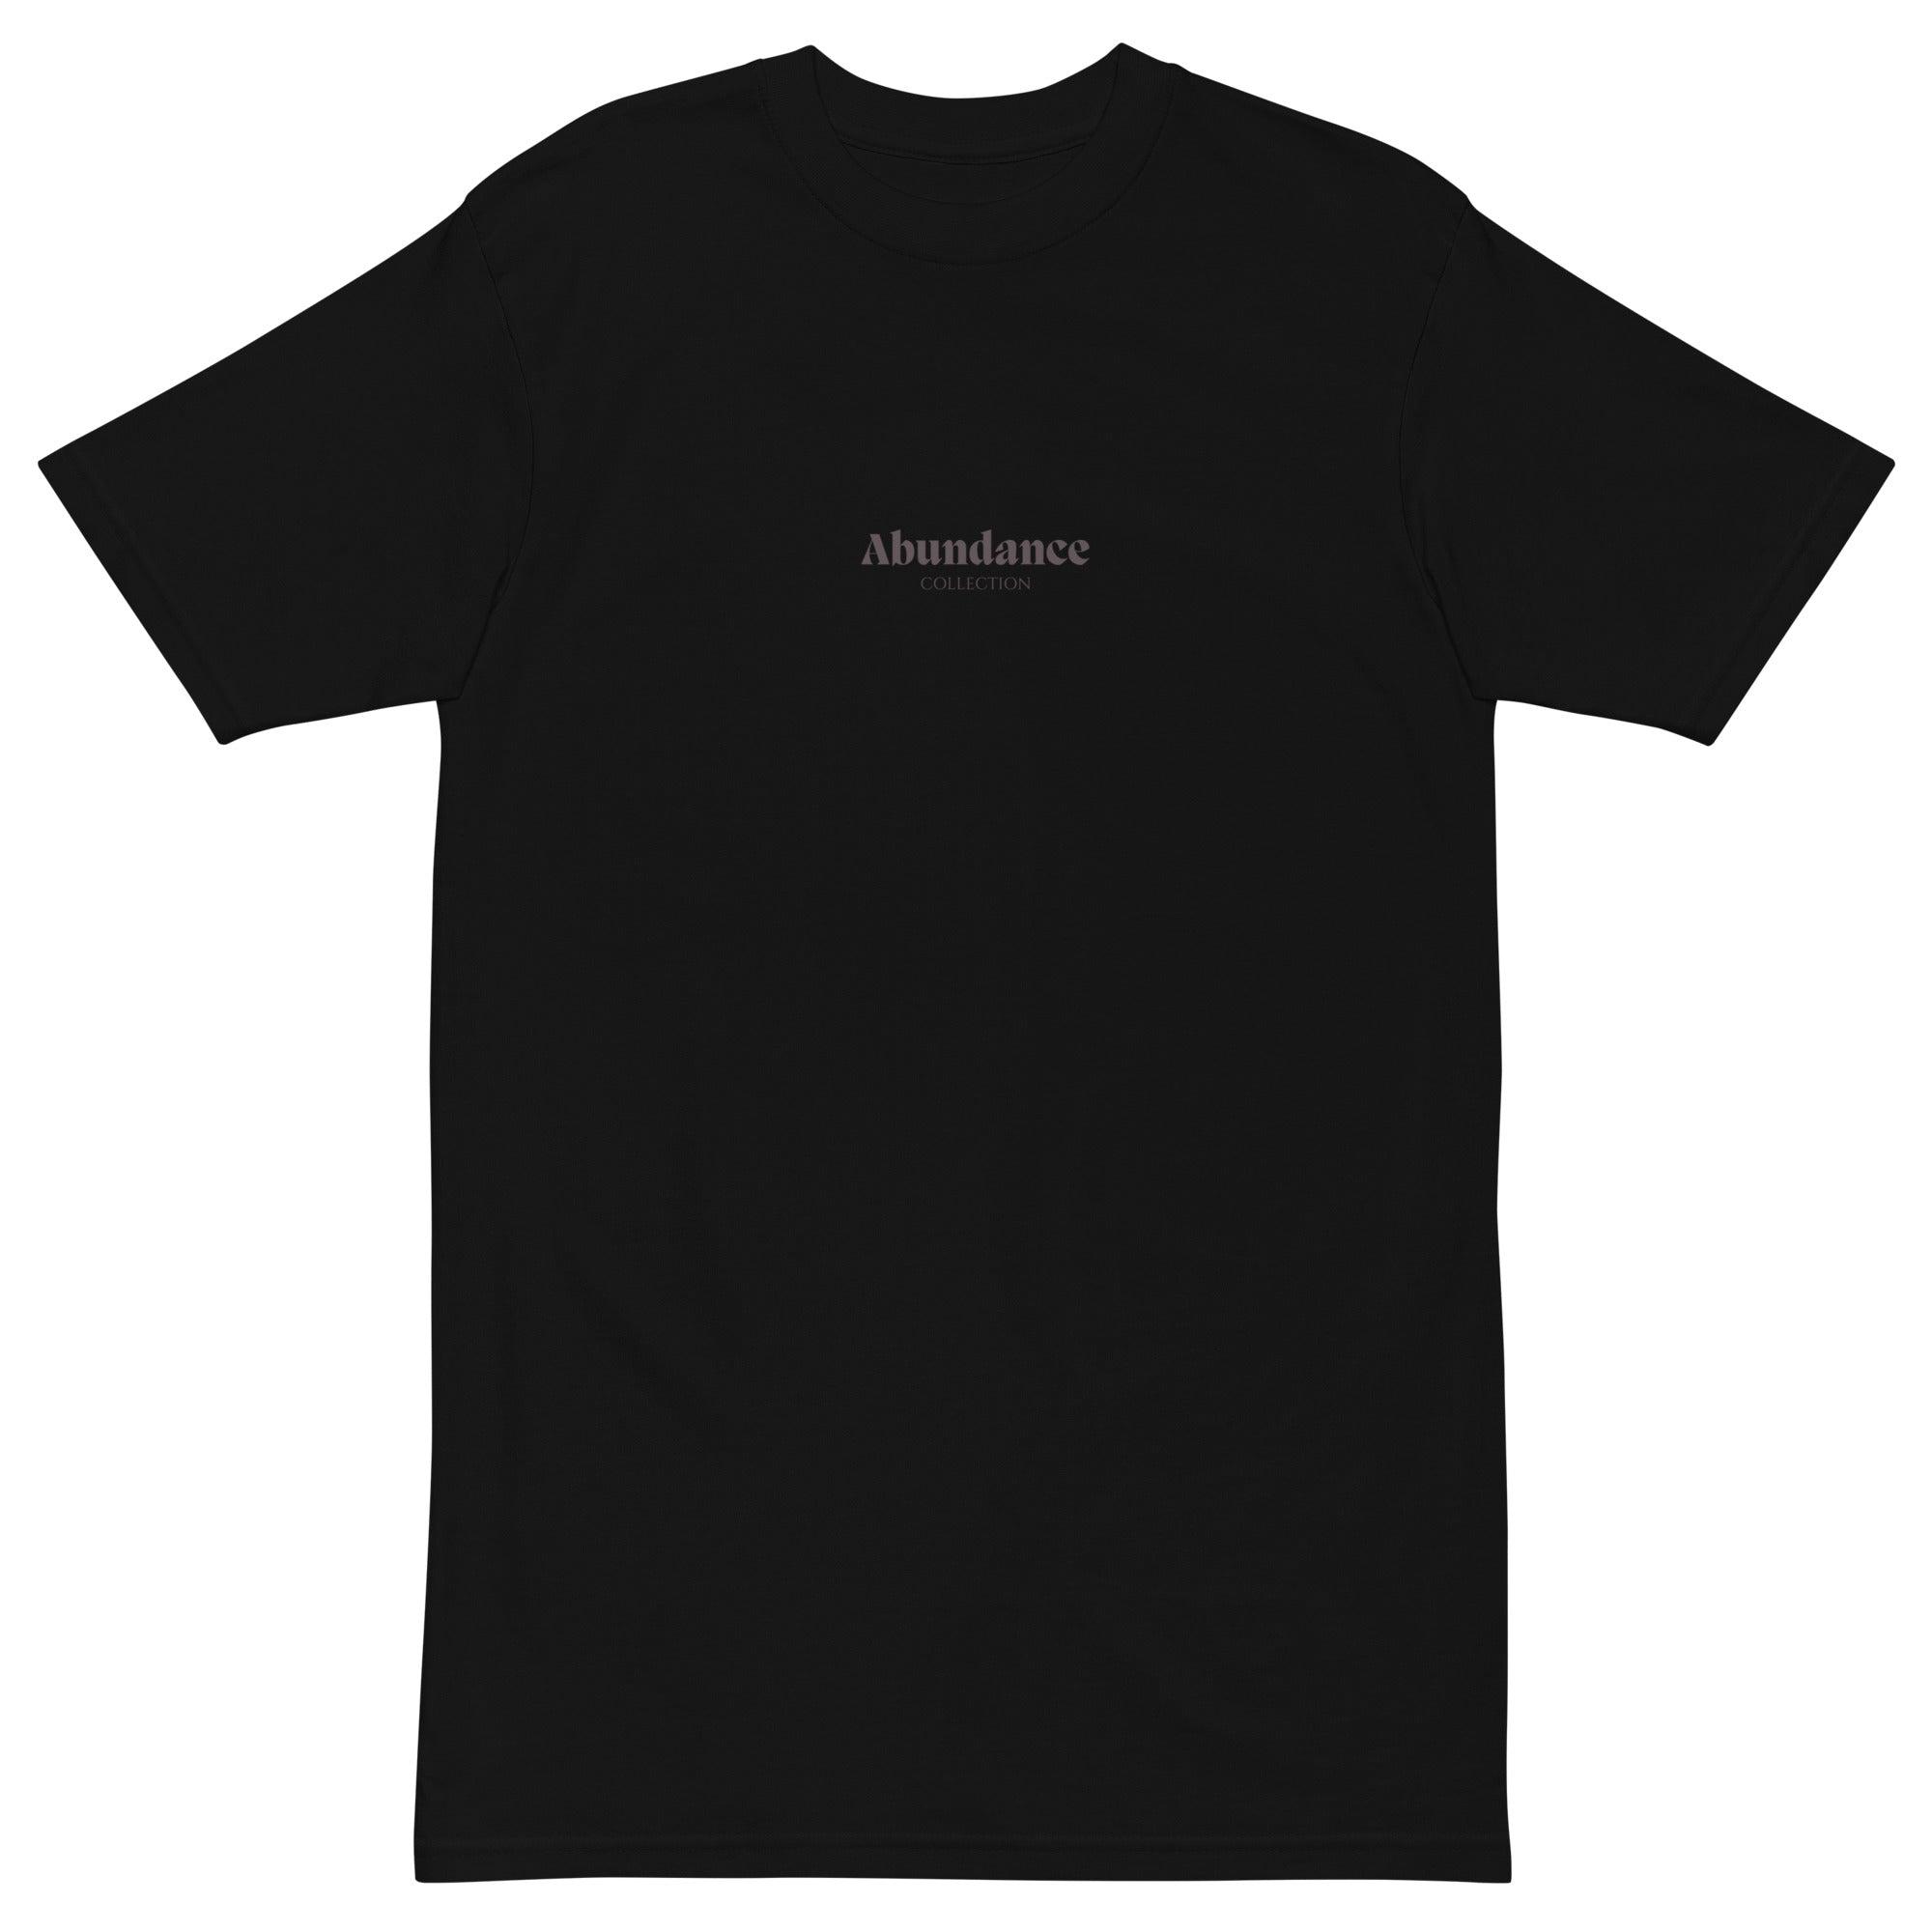 Black abundance t-shirt